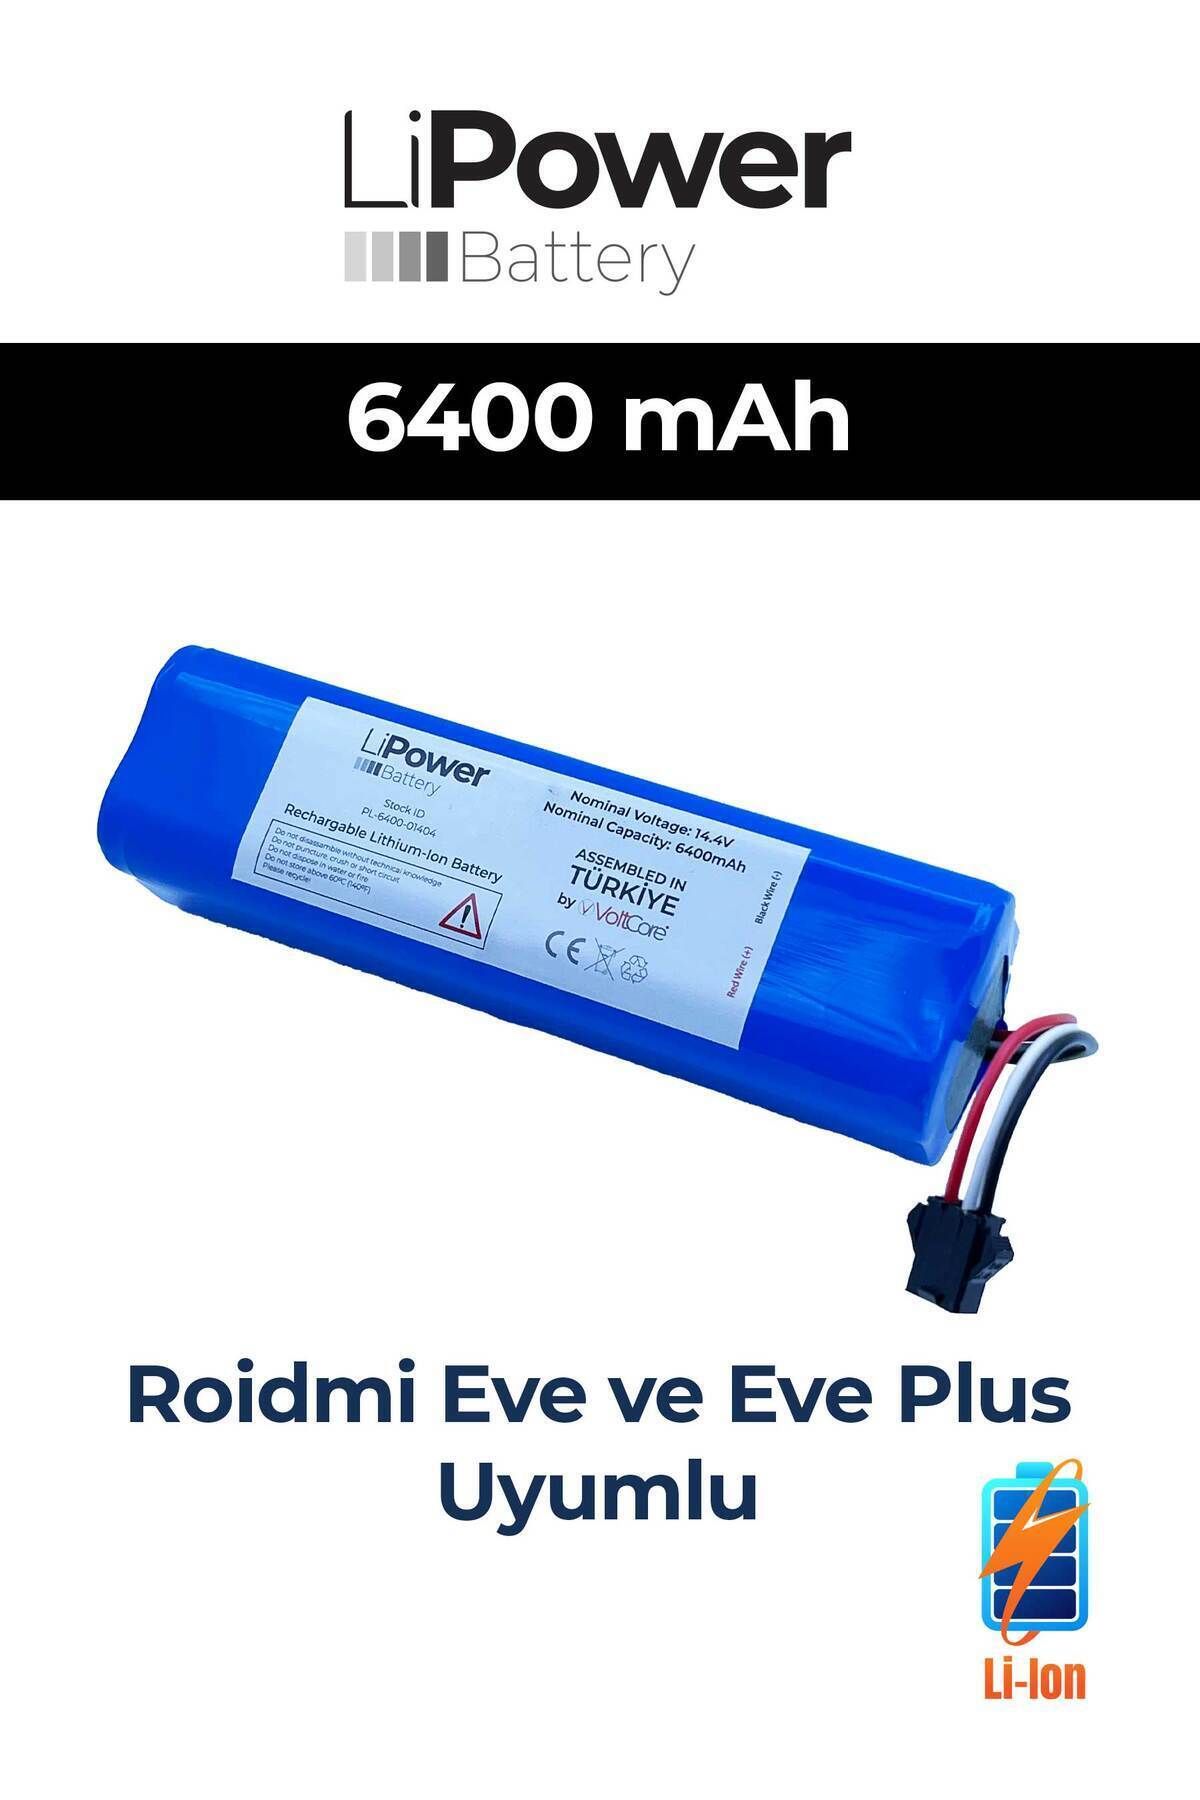 HighV Roidmi Eve & Eve Plus Uyumlu Robot Süpürge Bataryası 6400 Mah Pil (YÜKSEK KAPASİTE)